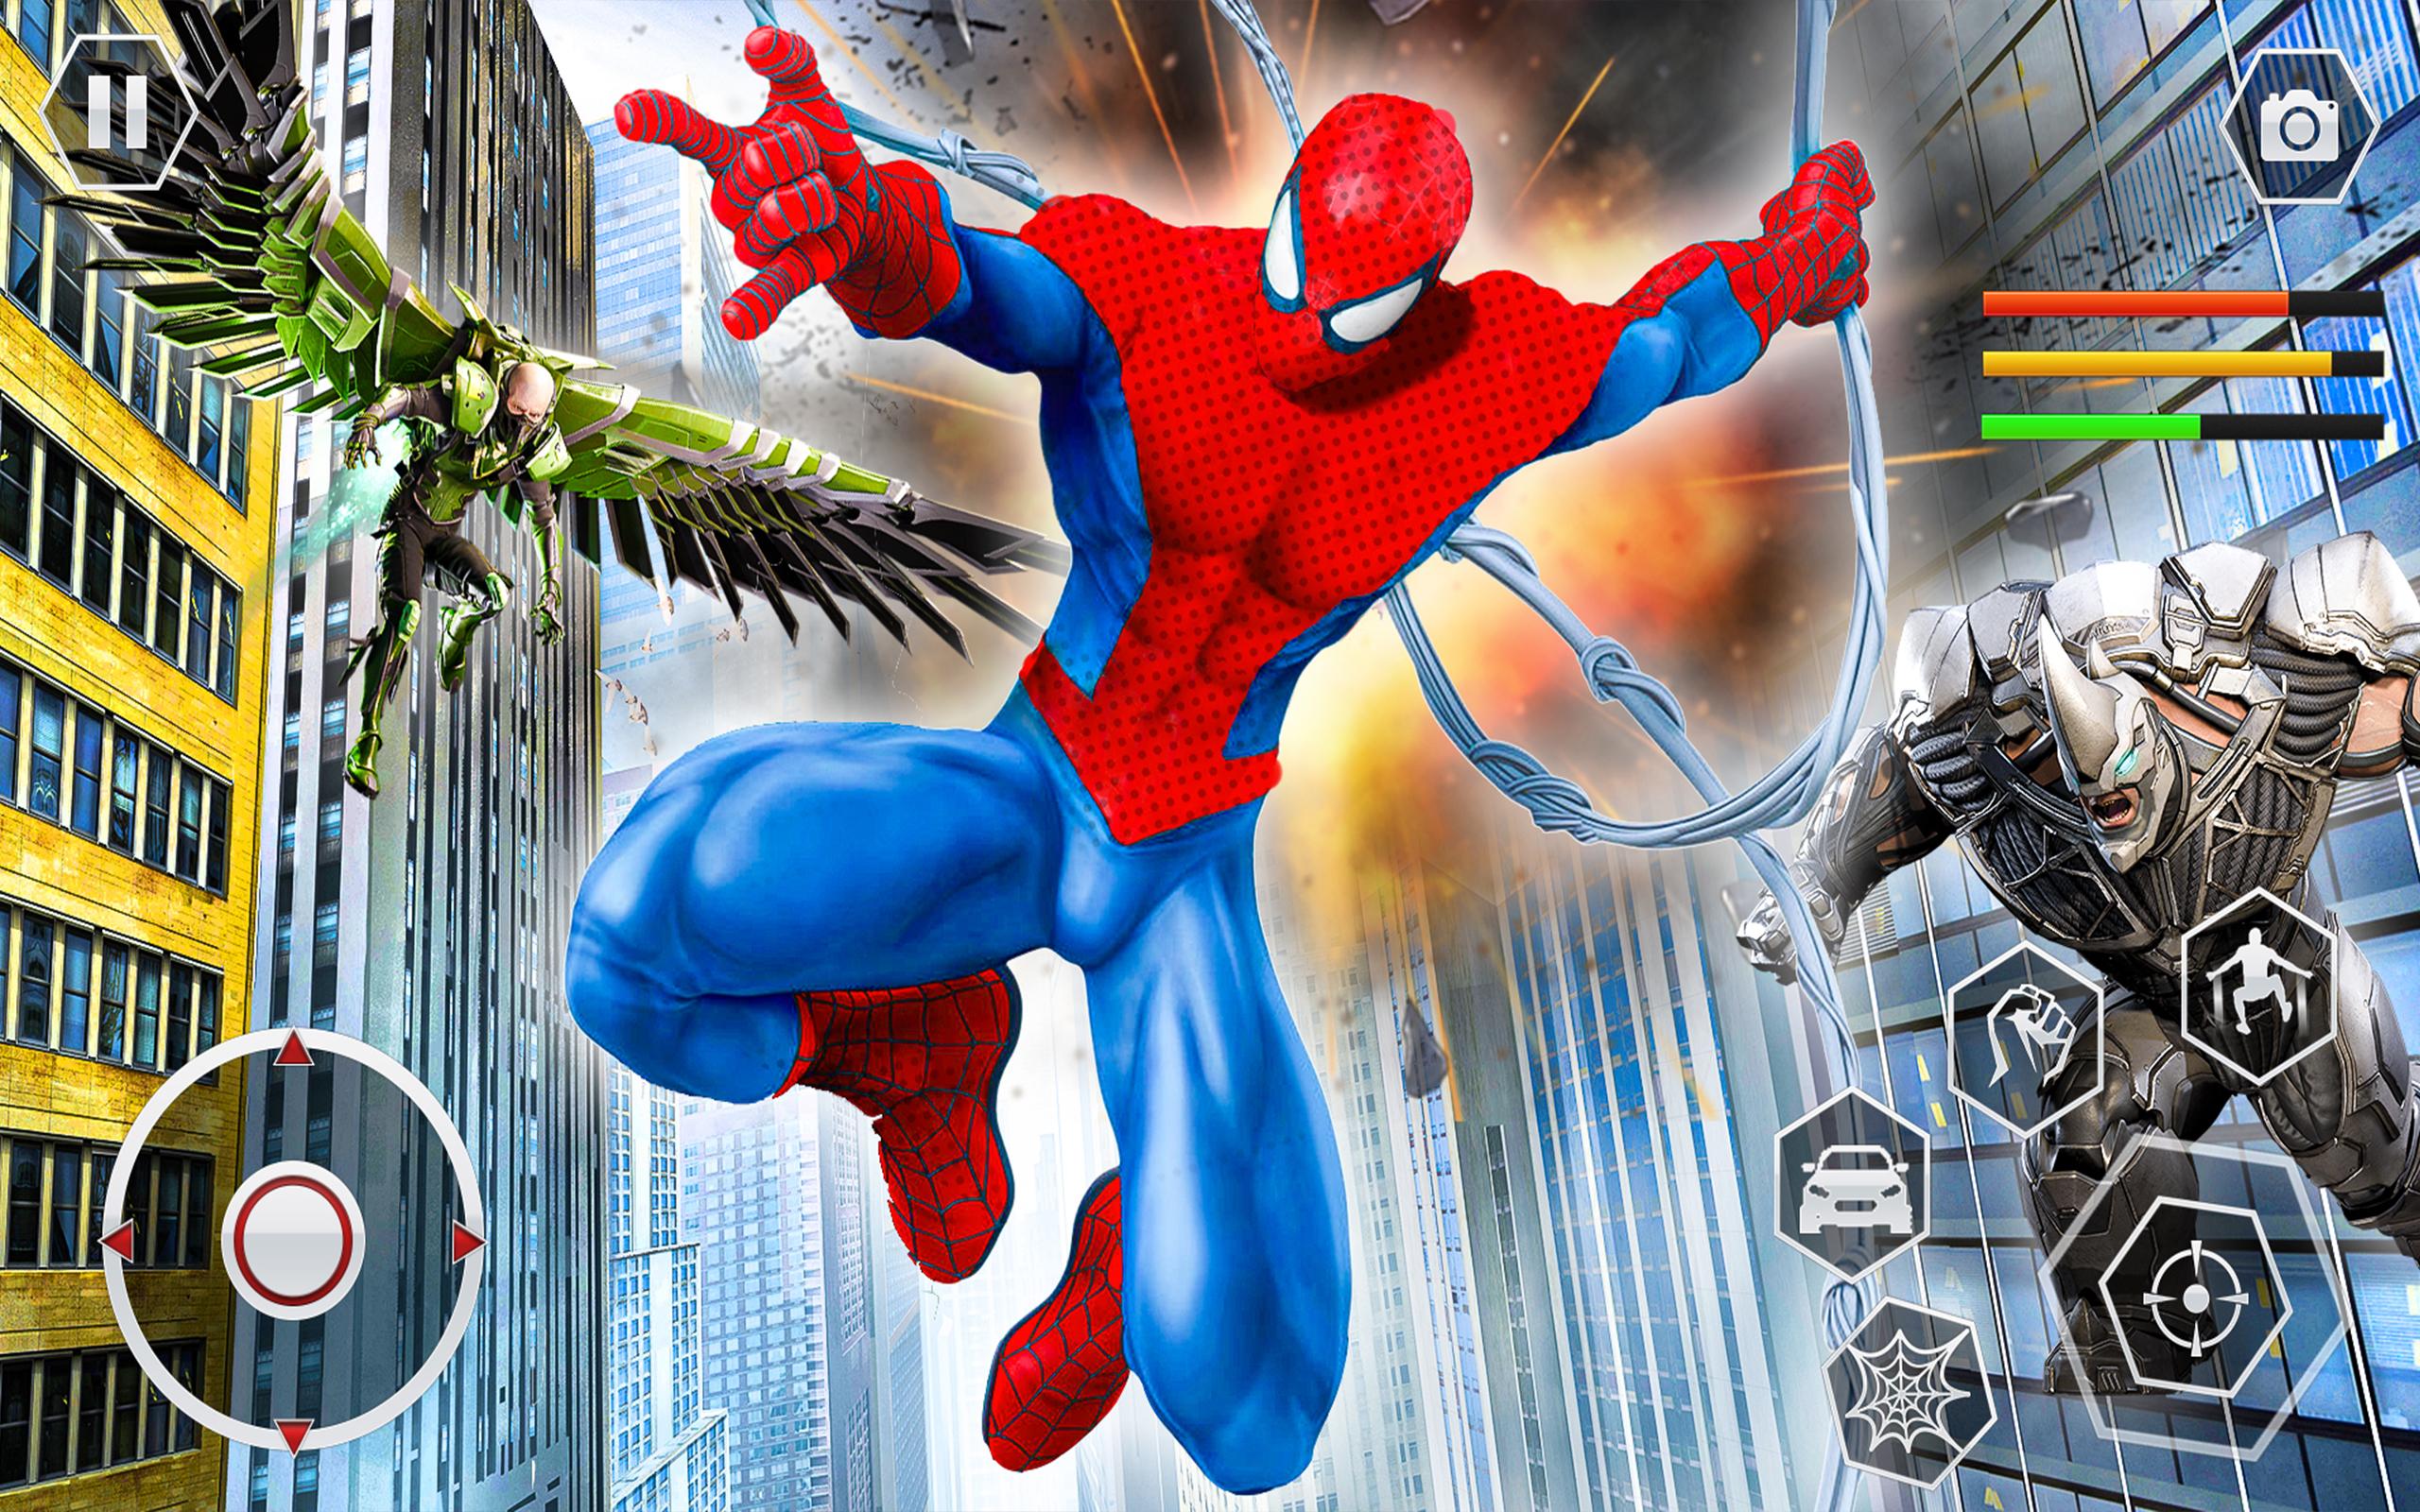 Spider Rope Superhero War Game - Crime City Battle 2.4 Screenshot 5